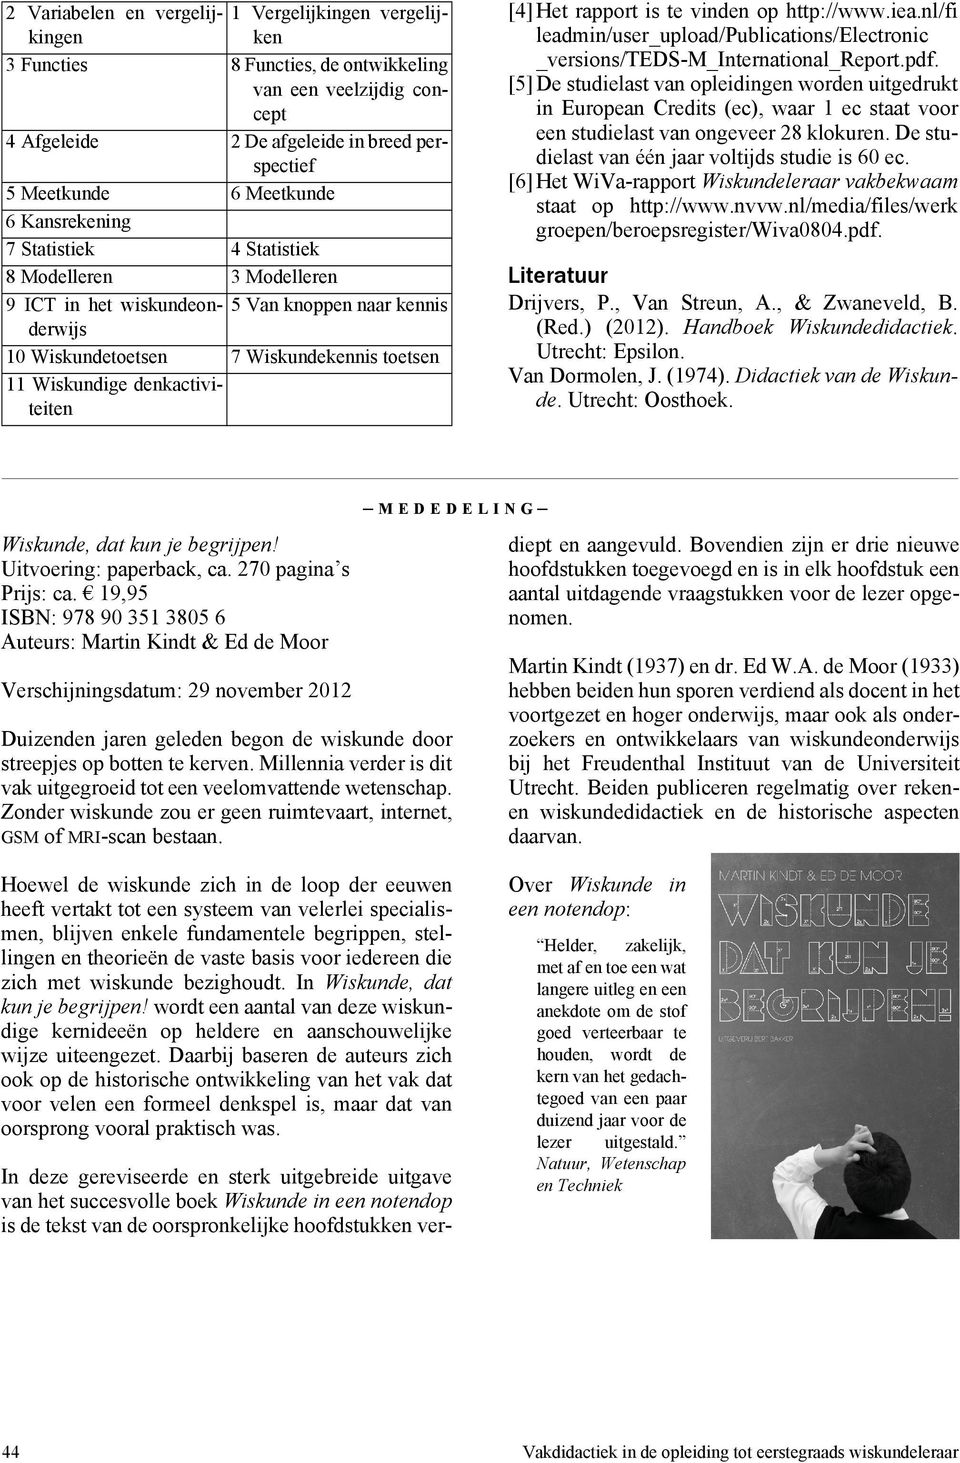 [4] Het rapport is te vinden op http://www.iea.nl/fi leadmin/user_upload/publications/electronic _versions/teds-m_international_report.pdf.